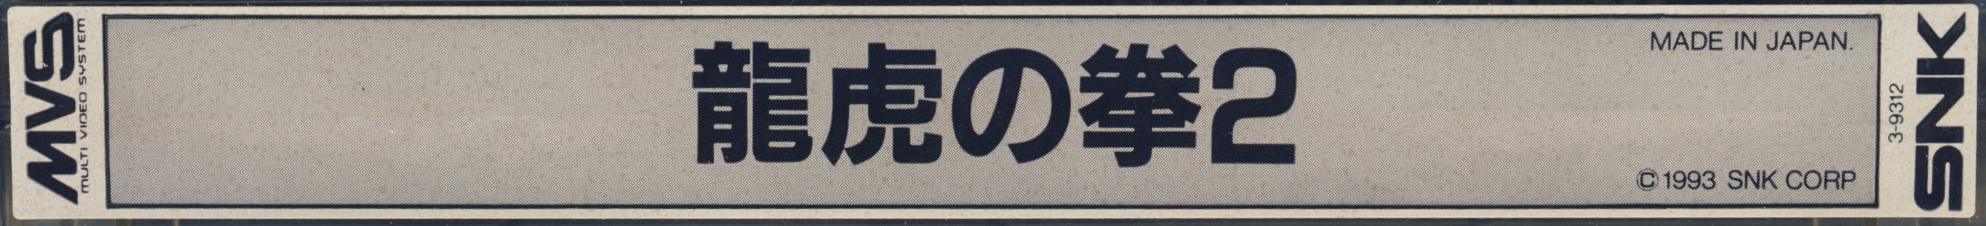 Aof 2 jp label.jpg